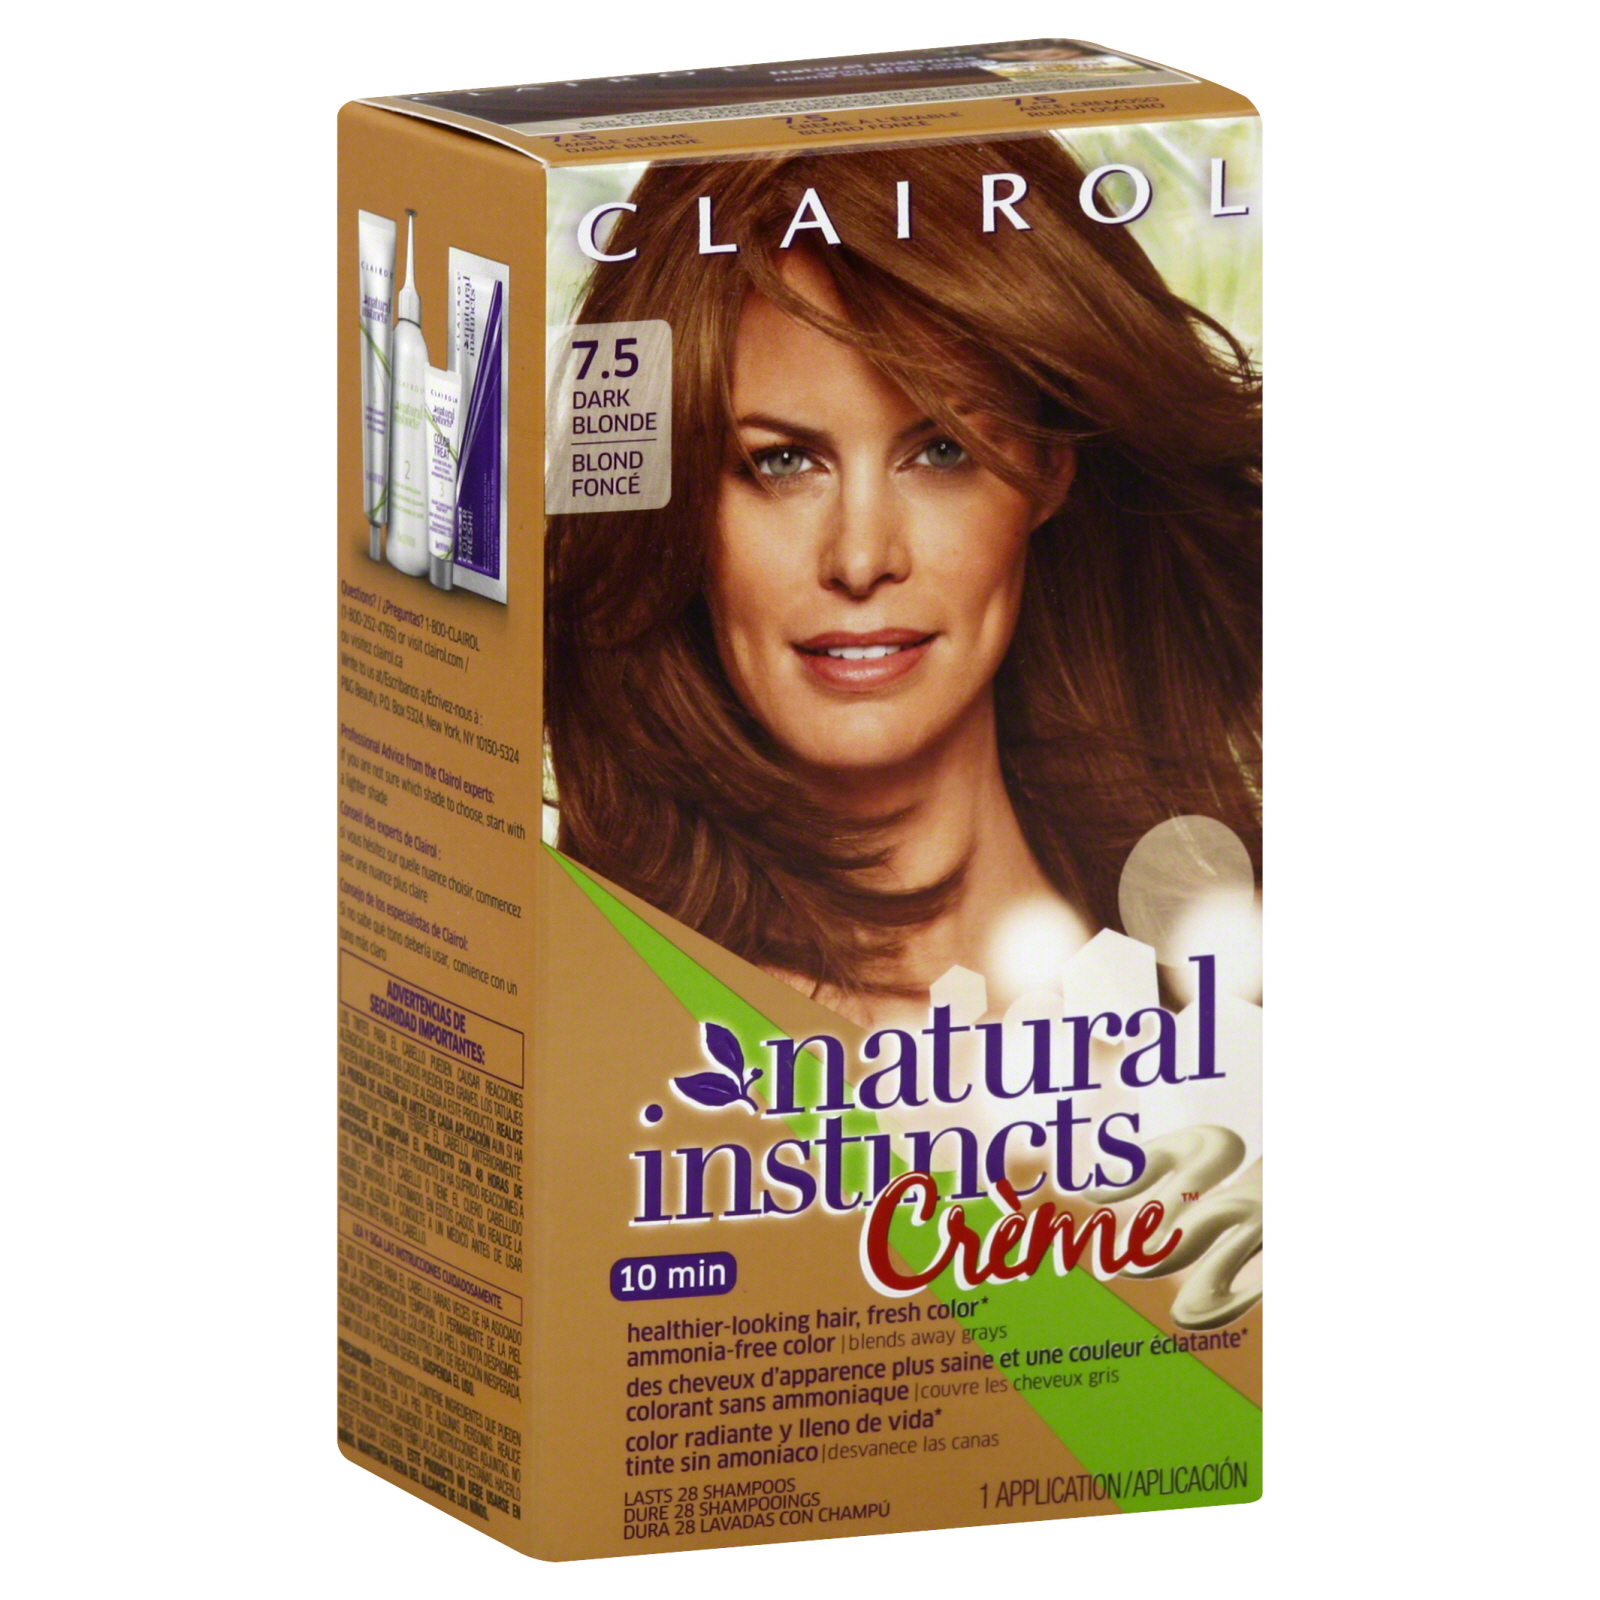 Clairol Natural Instincts Creme Hair Color, Dark Blonde 7.5, 1 application